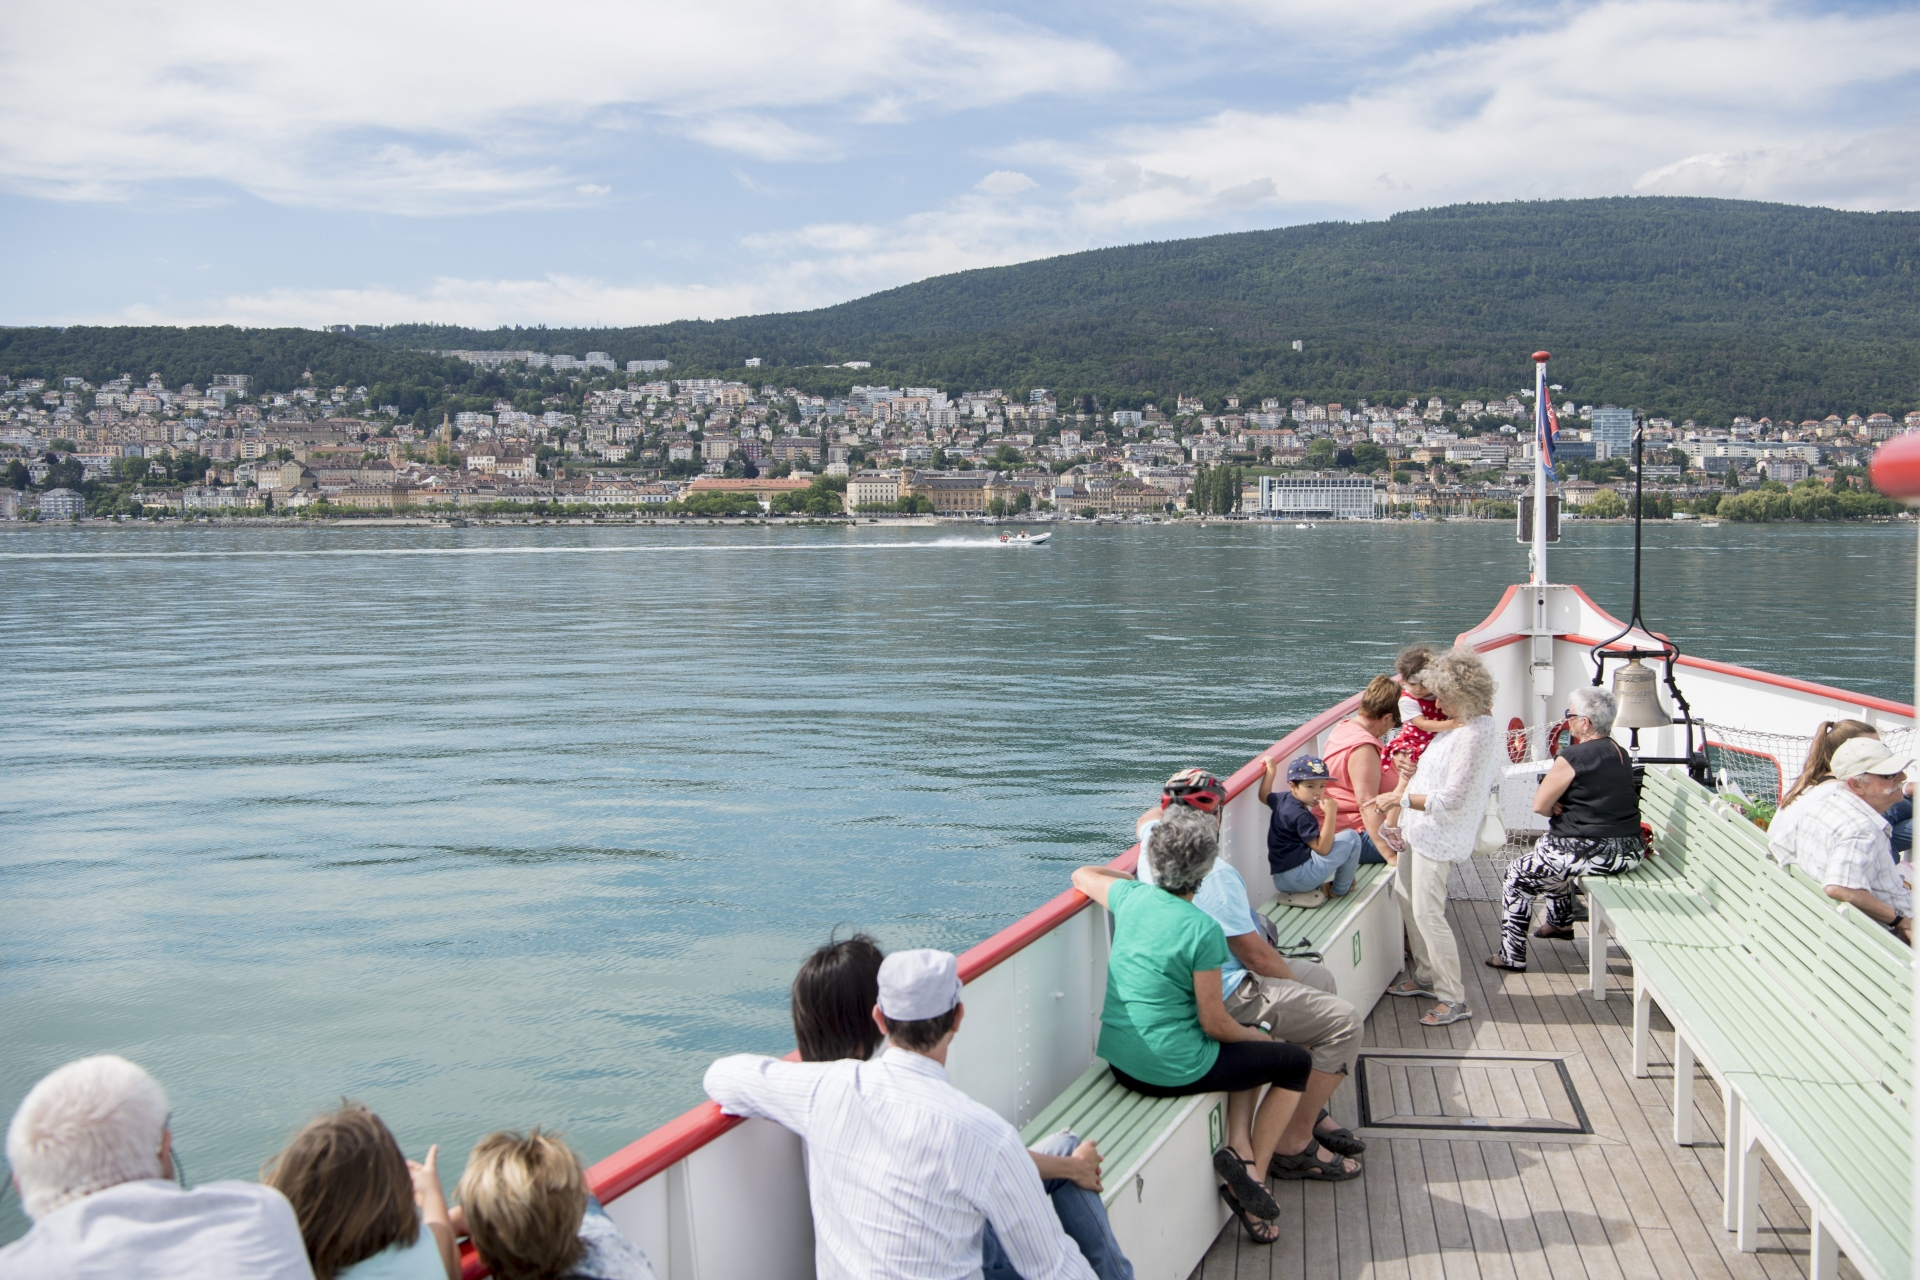 Le "Neuchâtel" reprendra du service le samedi 31 juillet.